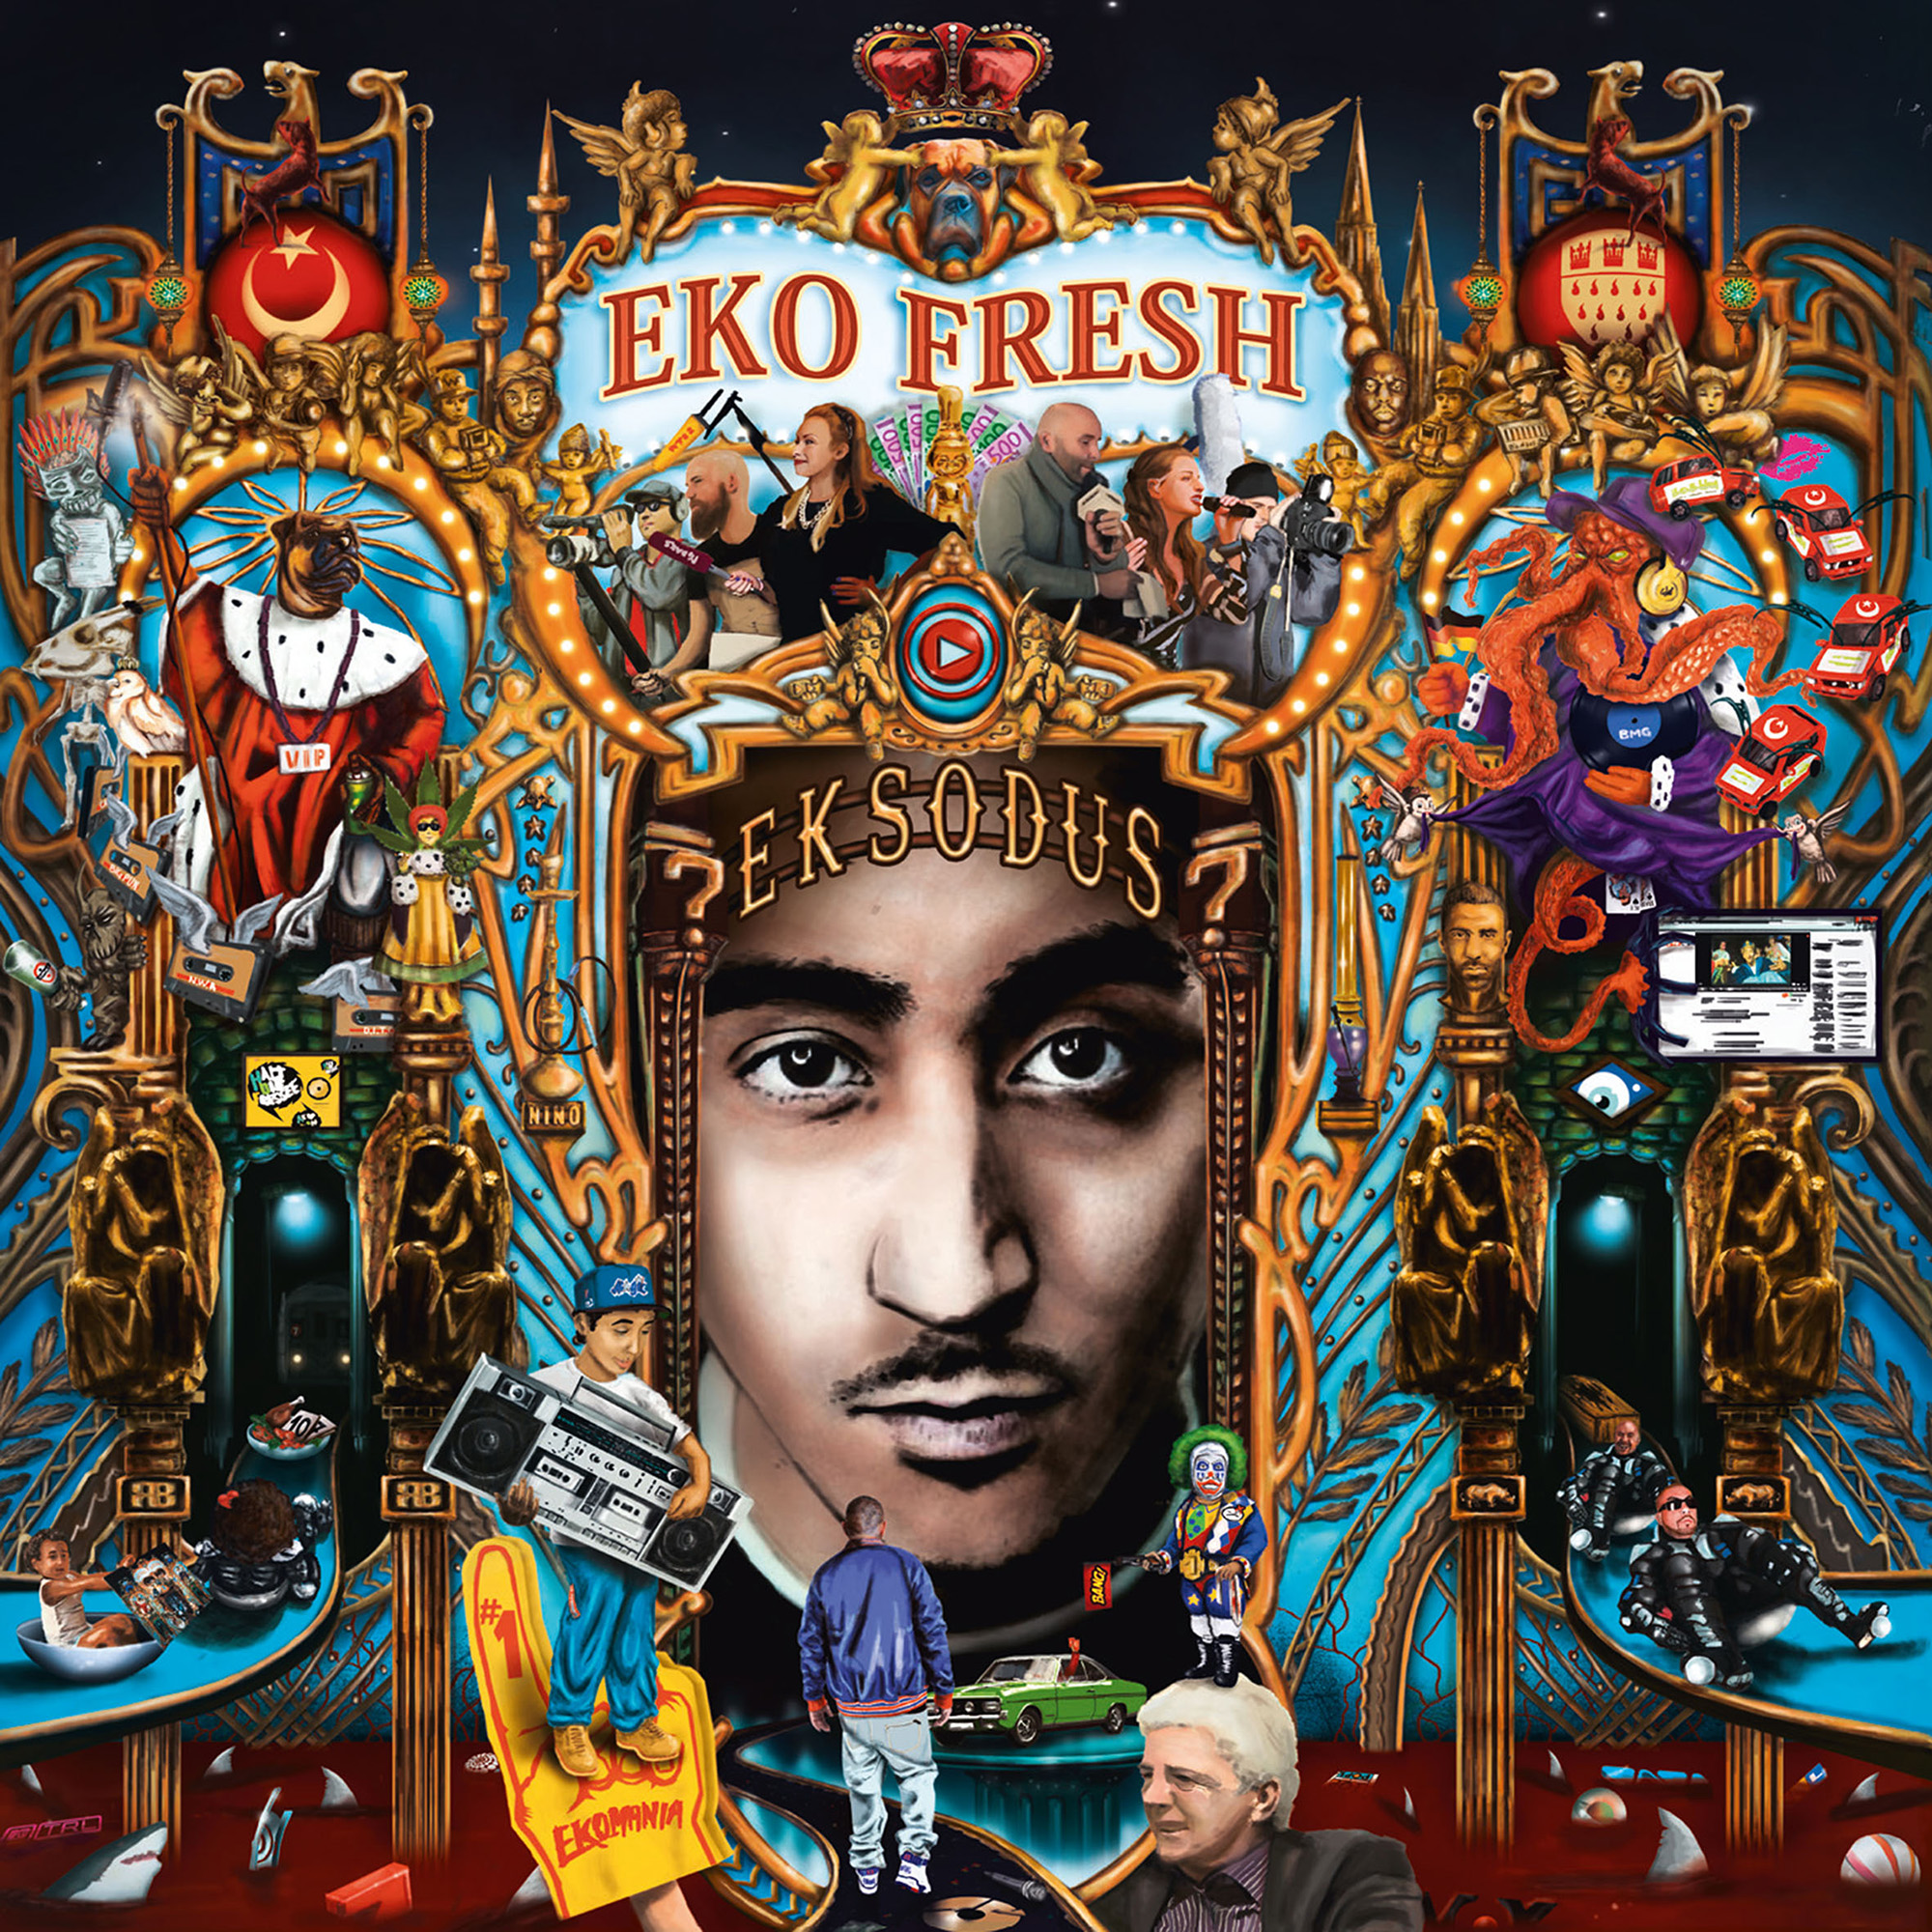 Eko Fresh - ”Eksodus”